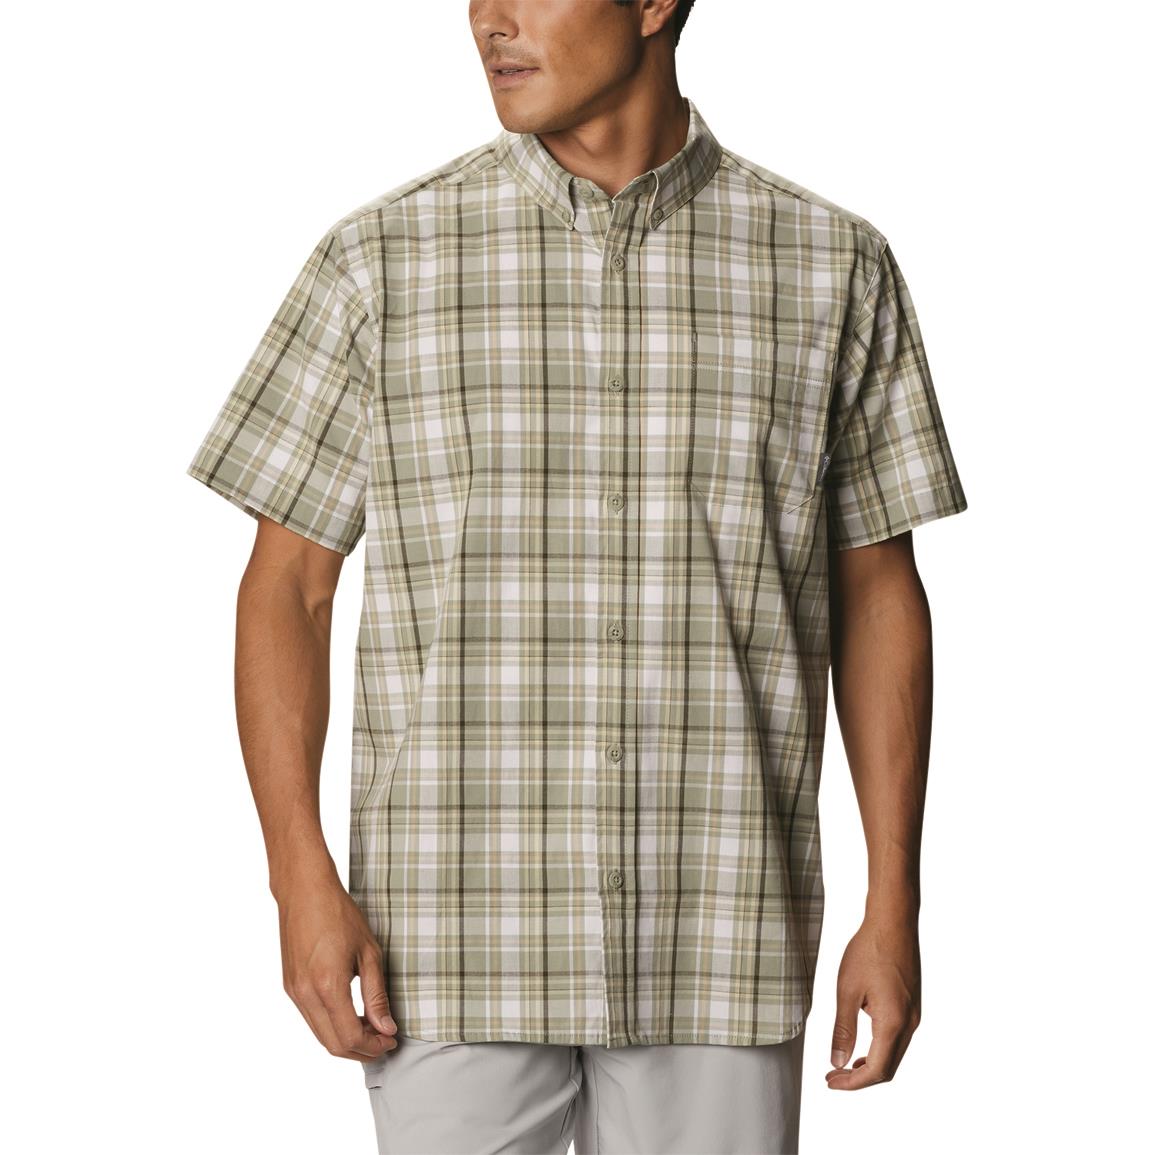 Columbia Men's Rapid Rivers II Short Sleeve Shirt, Safari Multiplaid